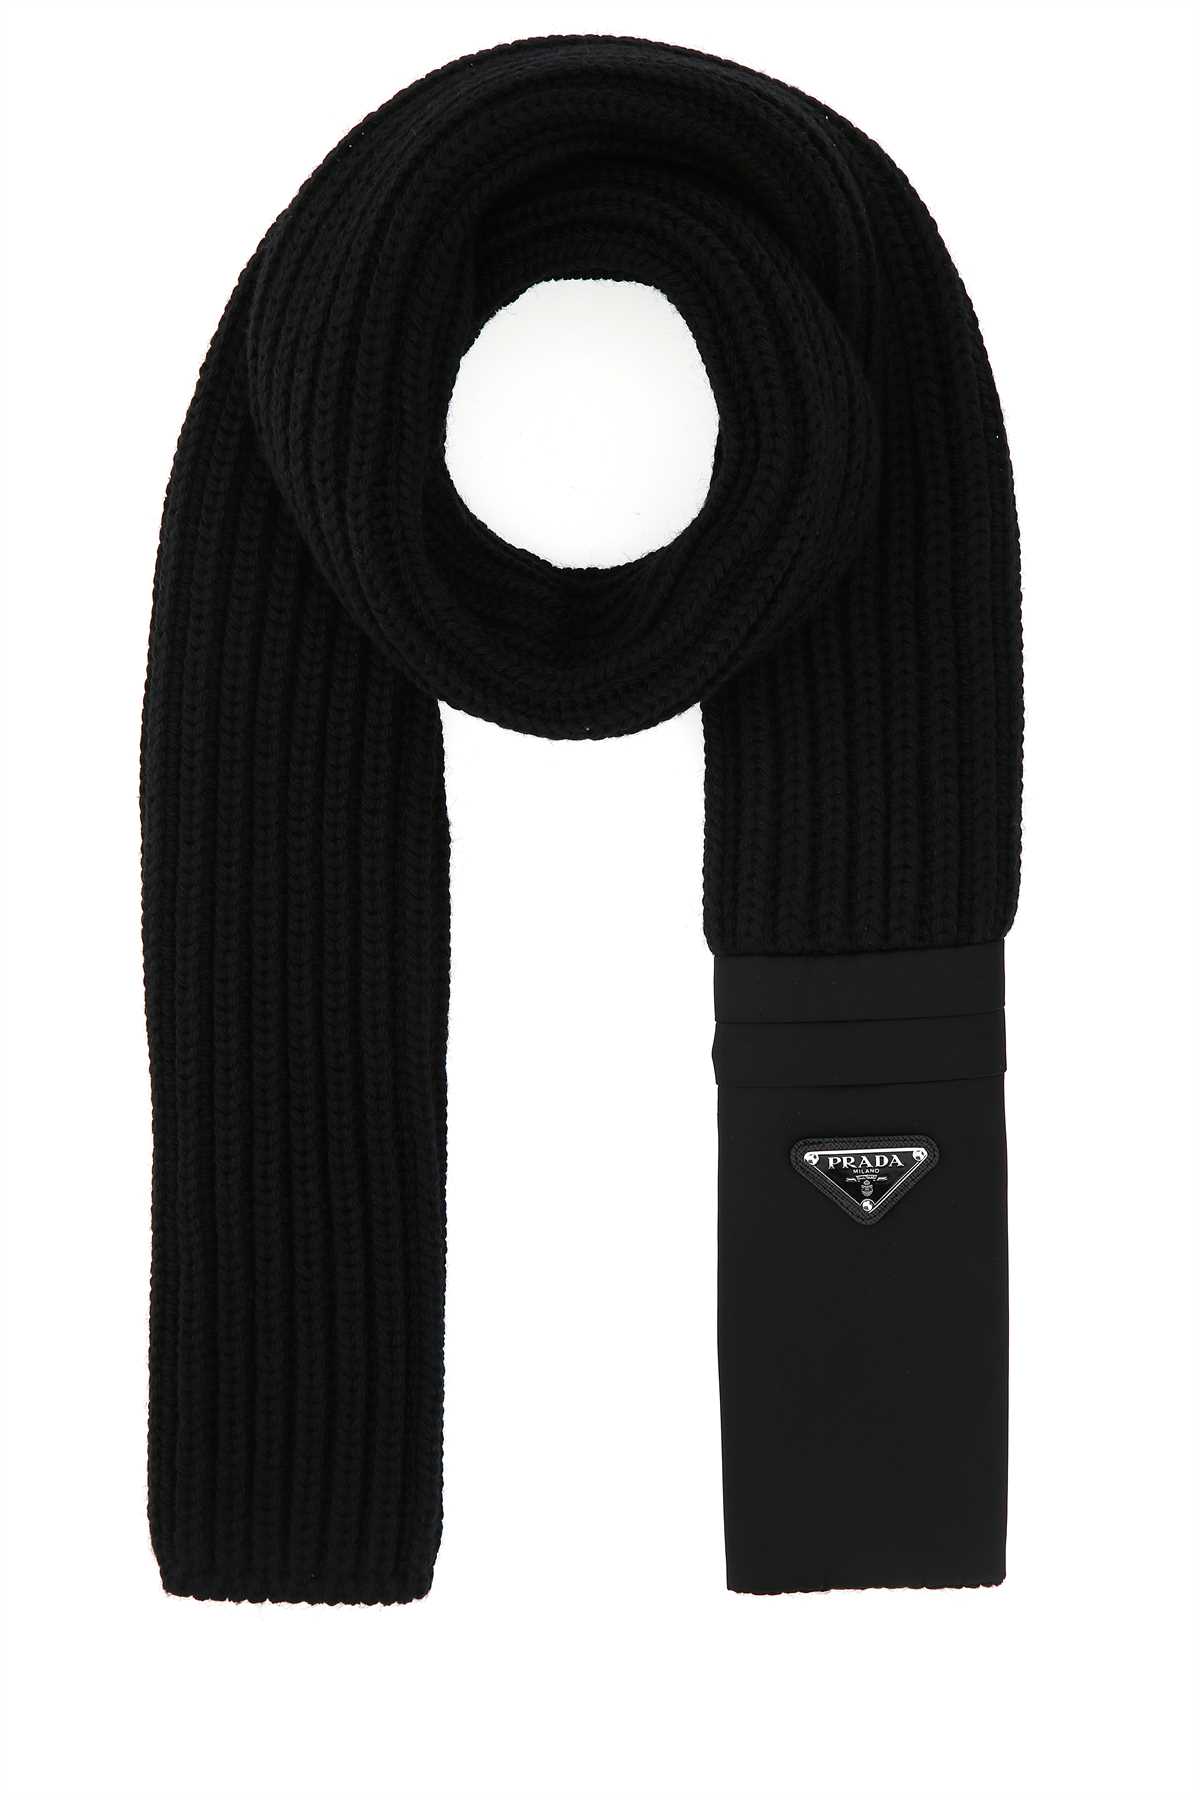 Prada Black Wool Scarf In F0002